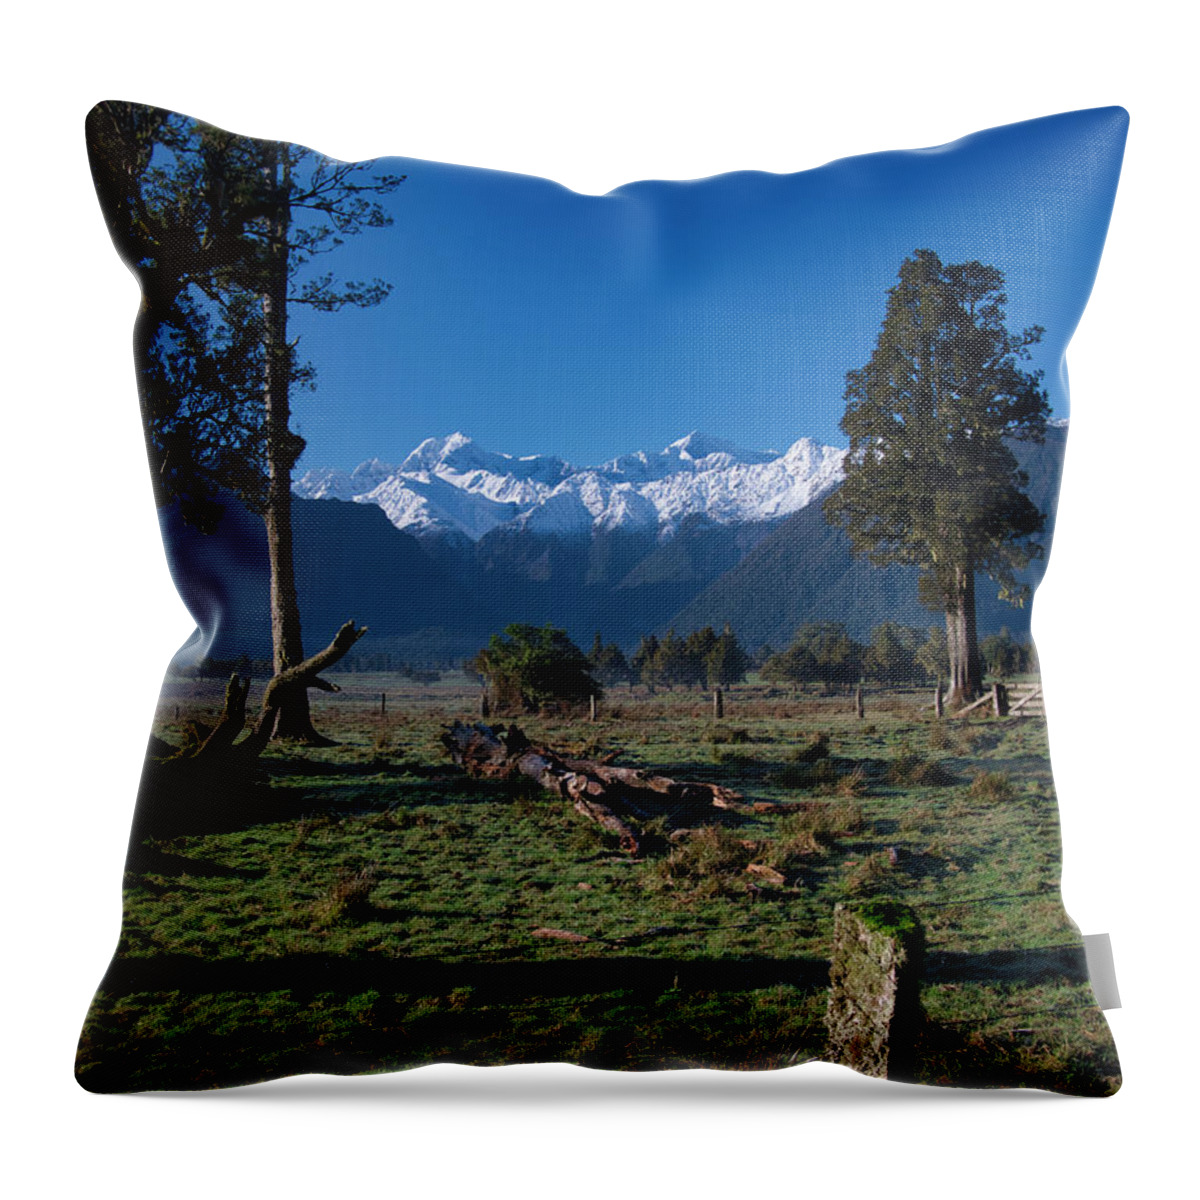 New Zealand Throw Pillow featuring the photograph New Zealand Alps by Steven Ralser